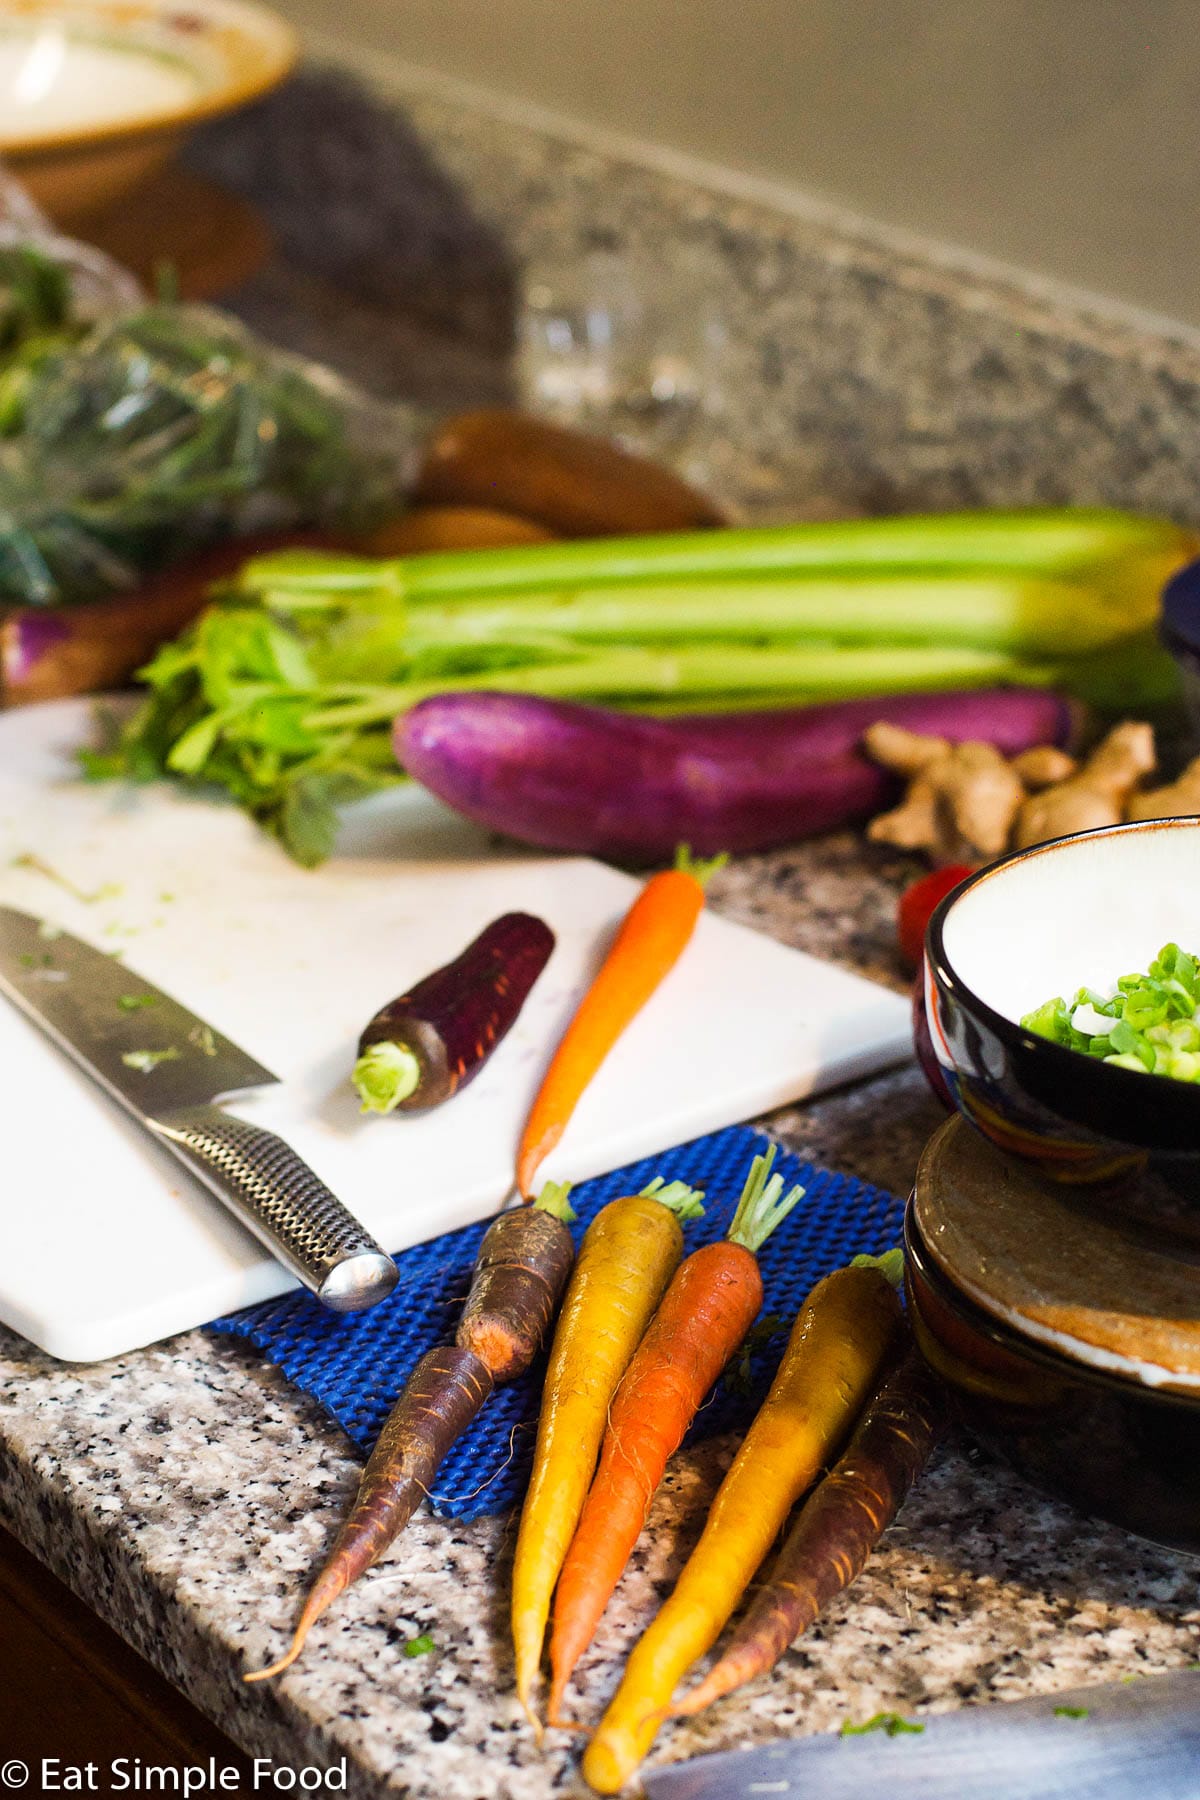 https://eatsimplefood.com/wp-content/uploads/2020/04/Mise-en-Place-Vegetables-Recipe-EatSimpleFood.com_.jpg